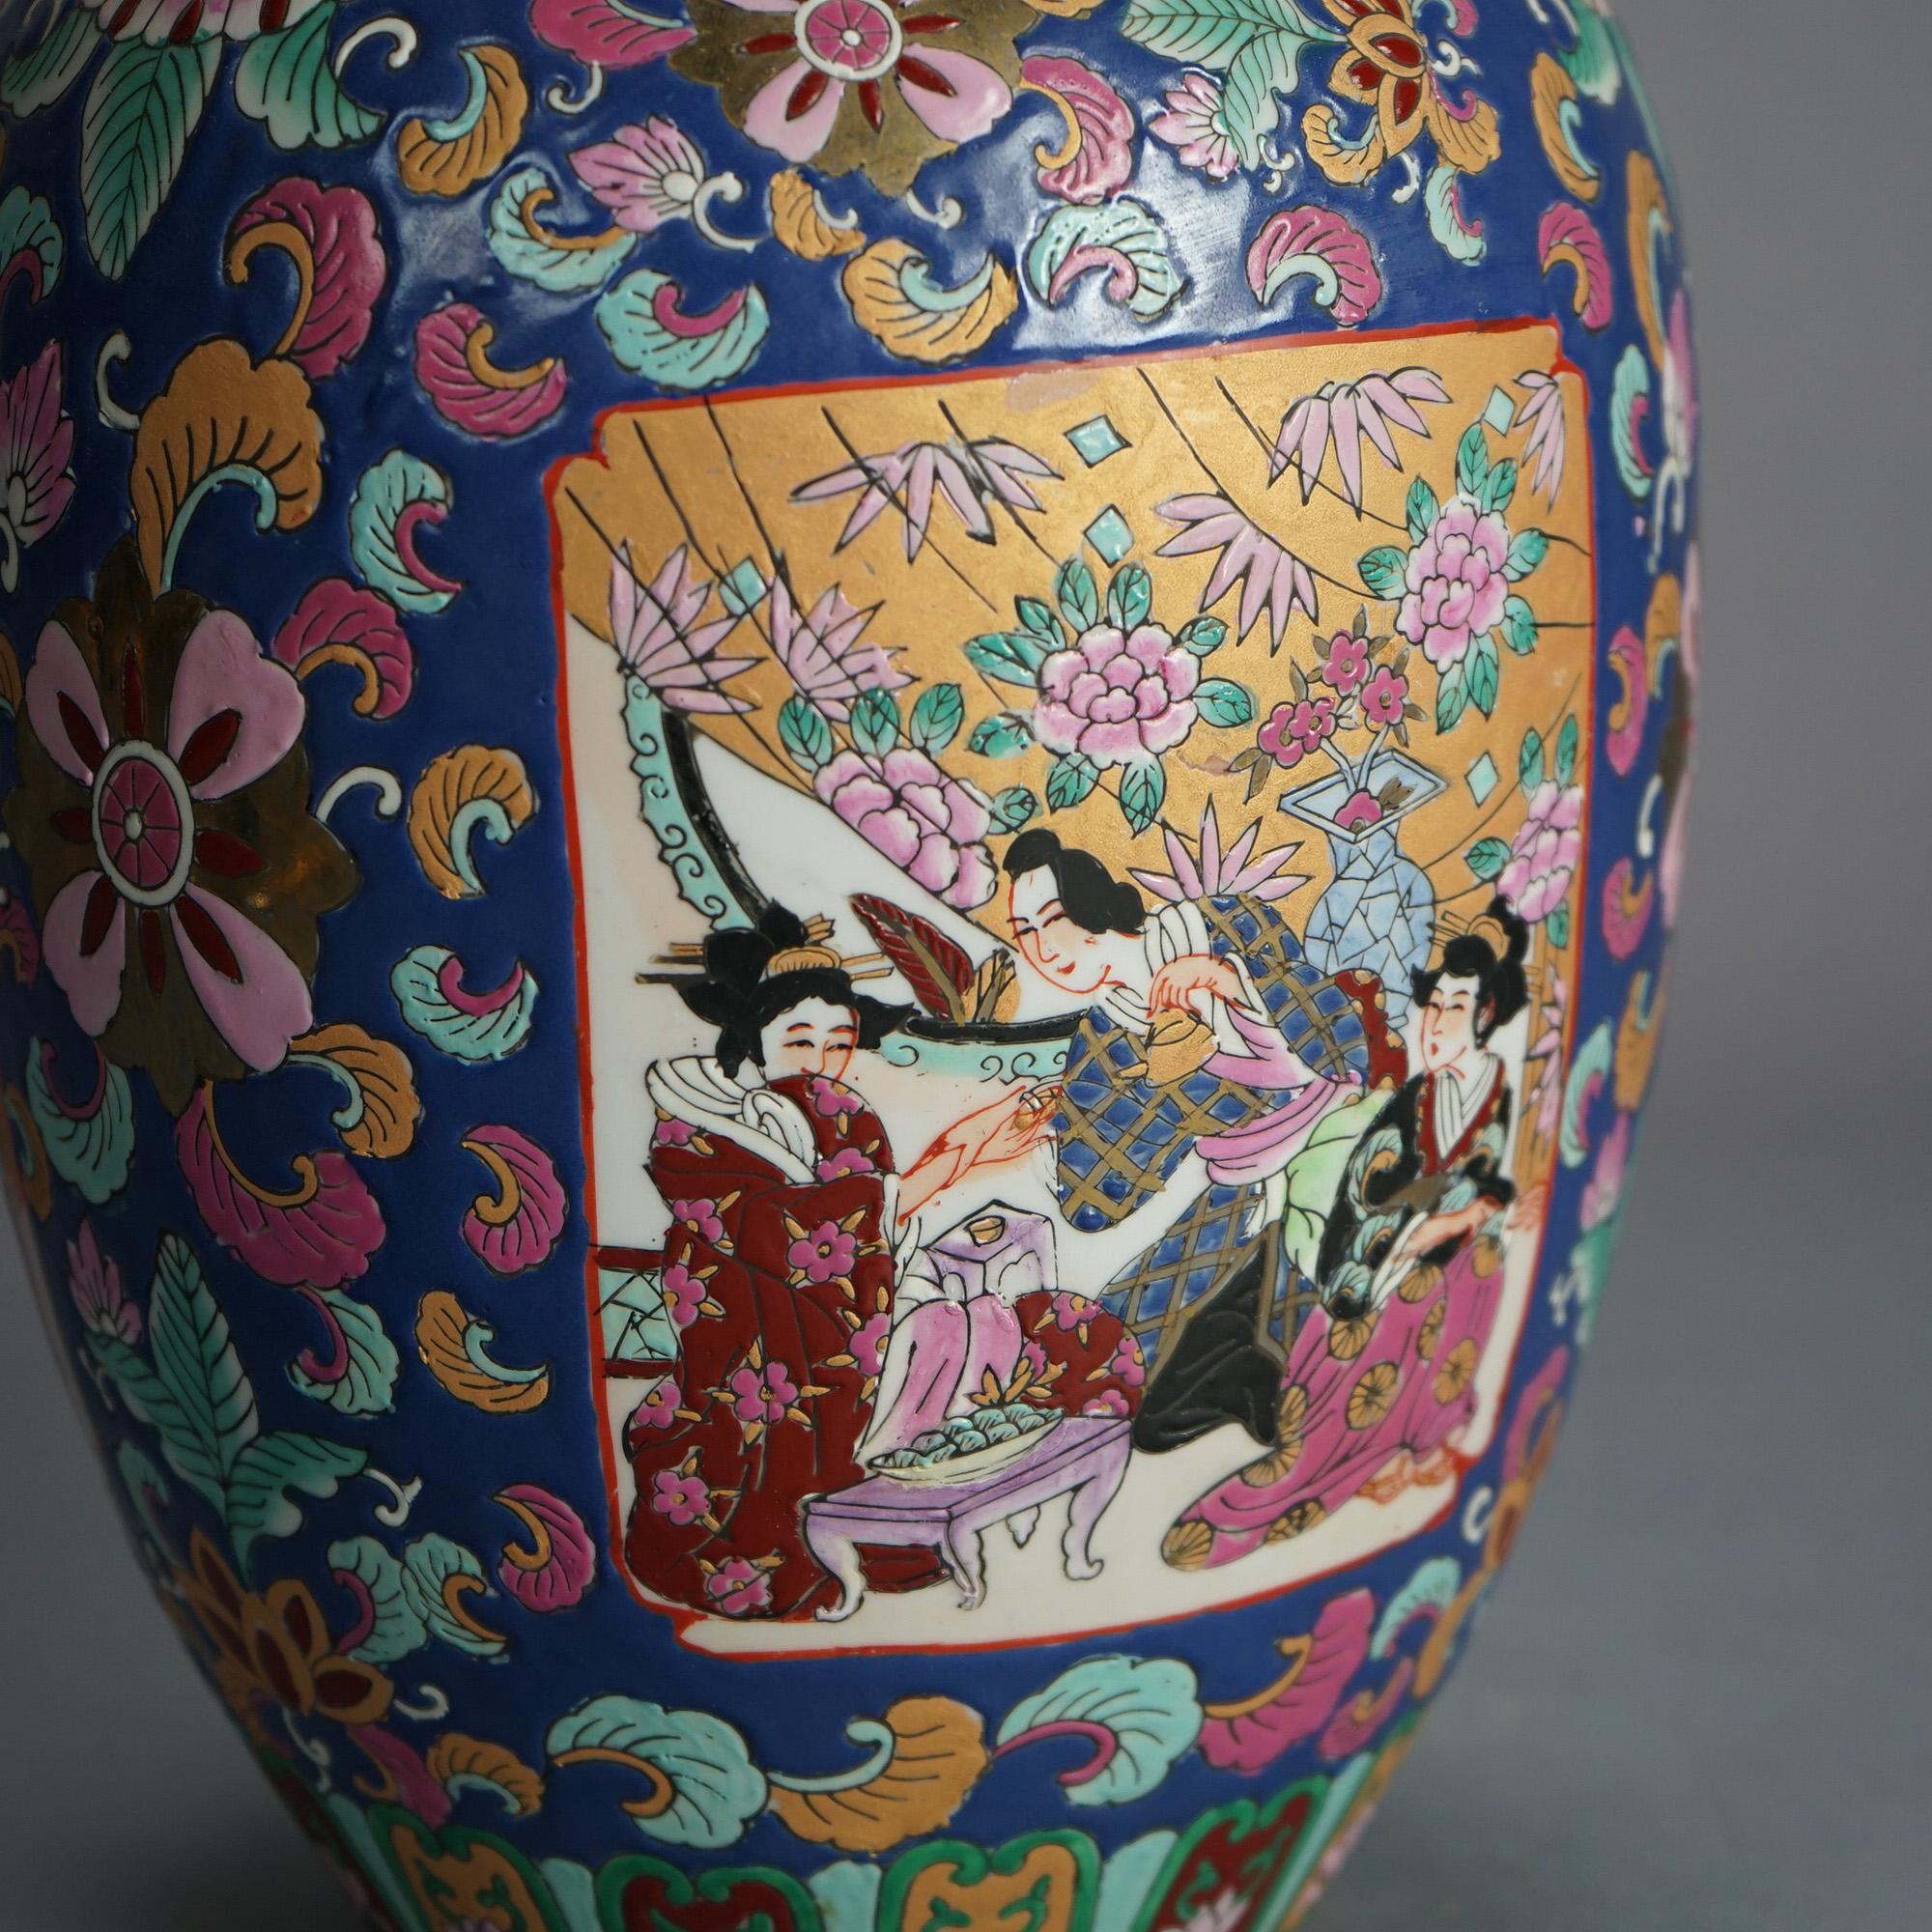 Chinese Enameled Porcelain Lidded Jar with Genre Scene & Garden Flowers 20thC

Measures - 12.5